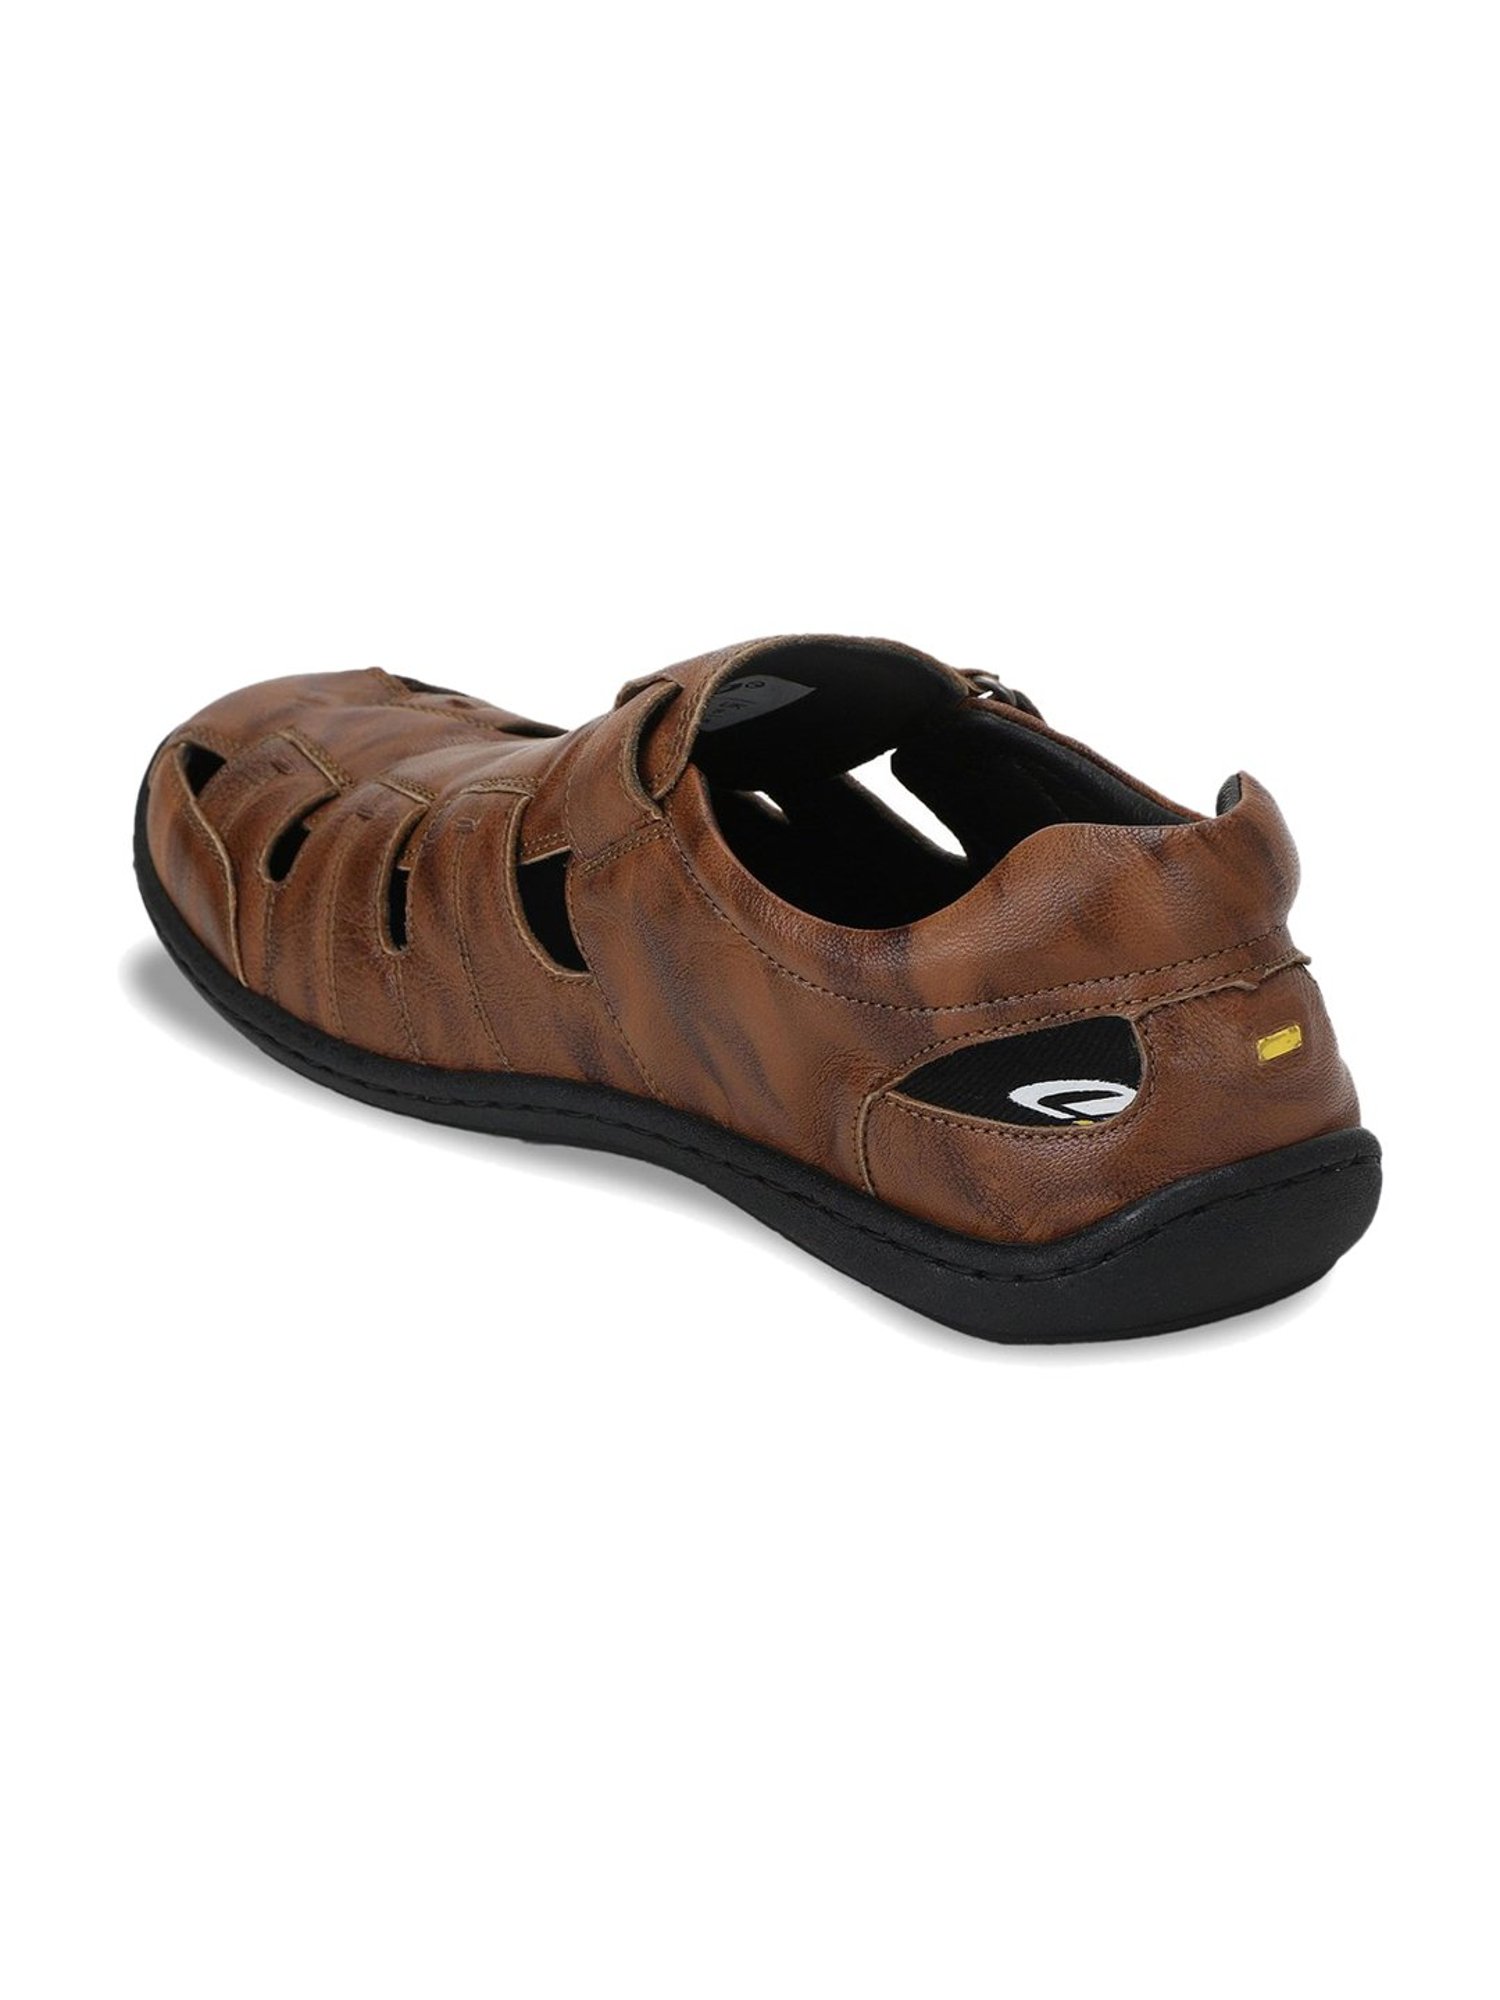 Skechers Tresmen Outseen CHOC Chocolate brown Mens Closed Toe Sandals 204111